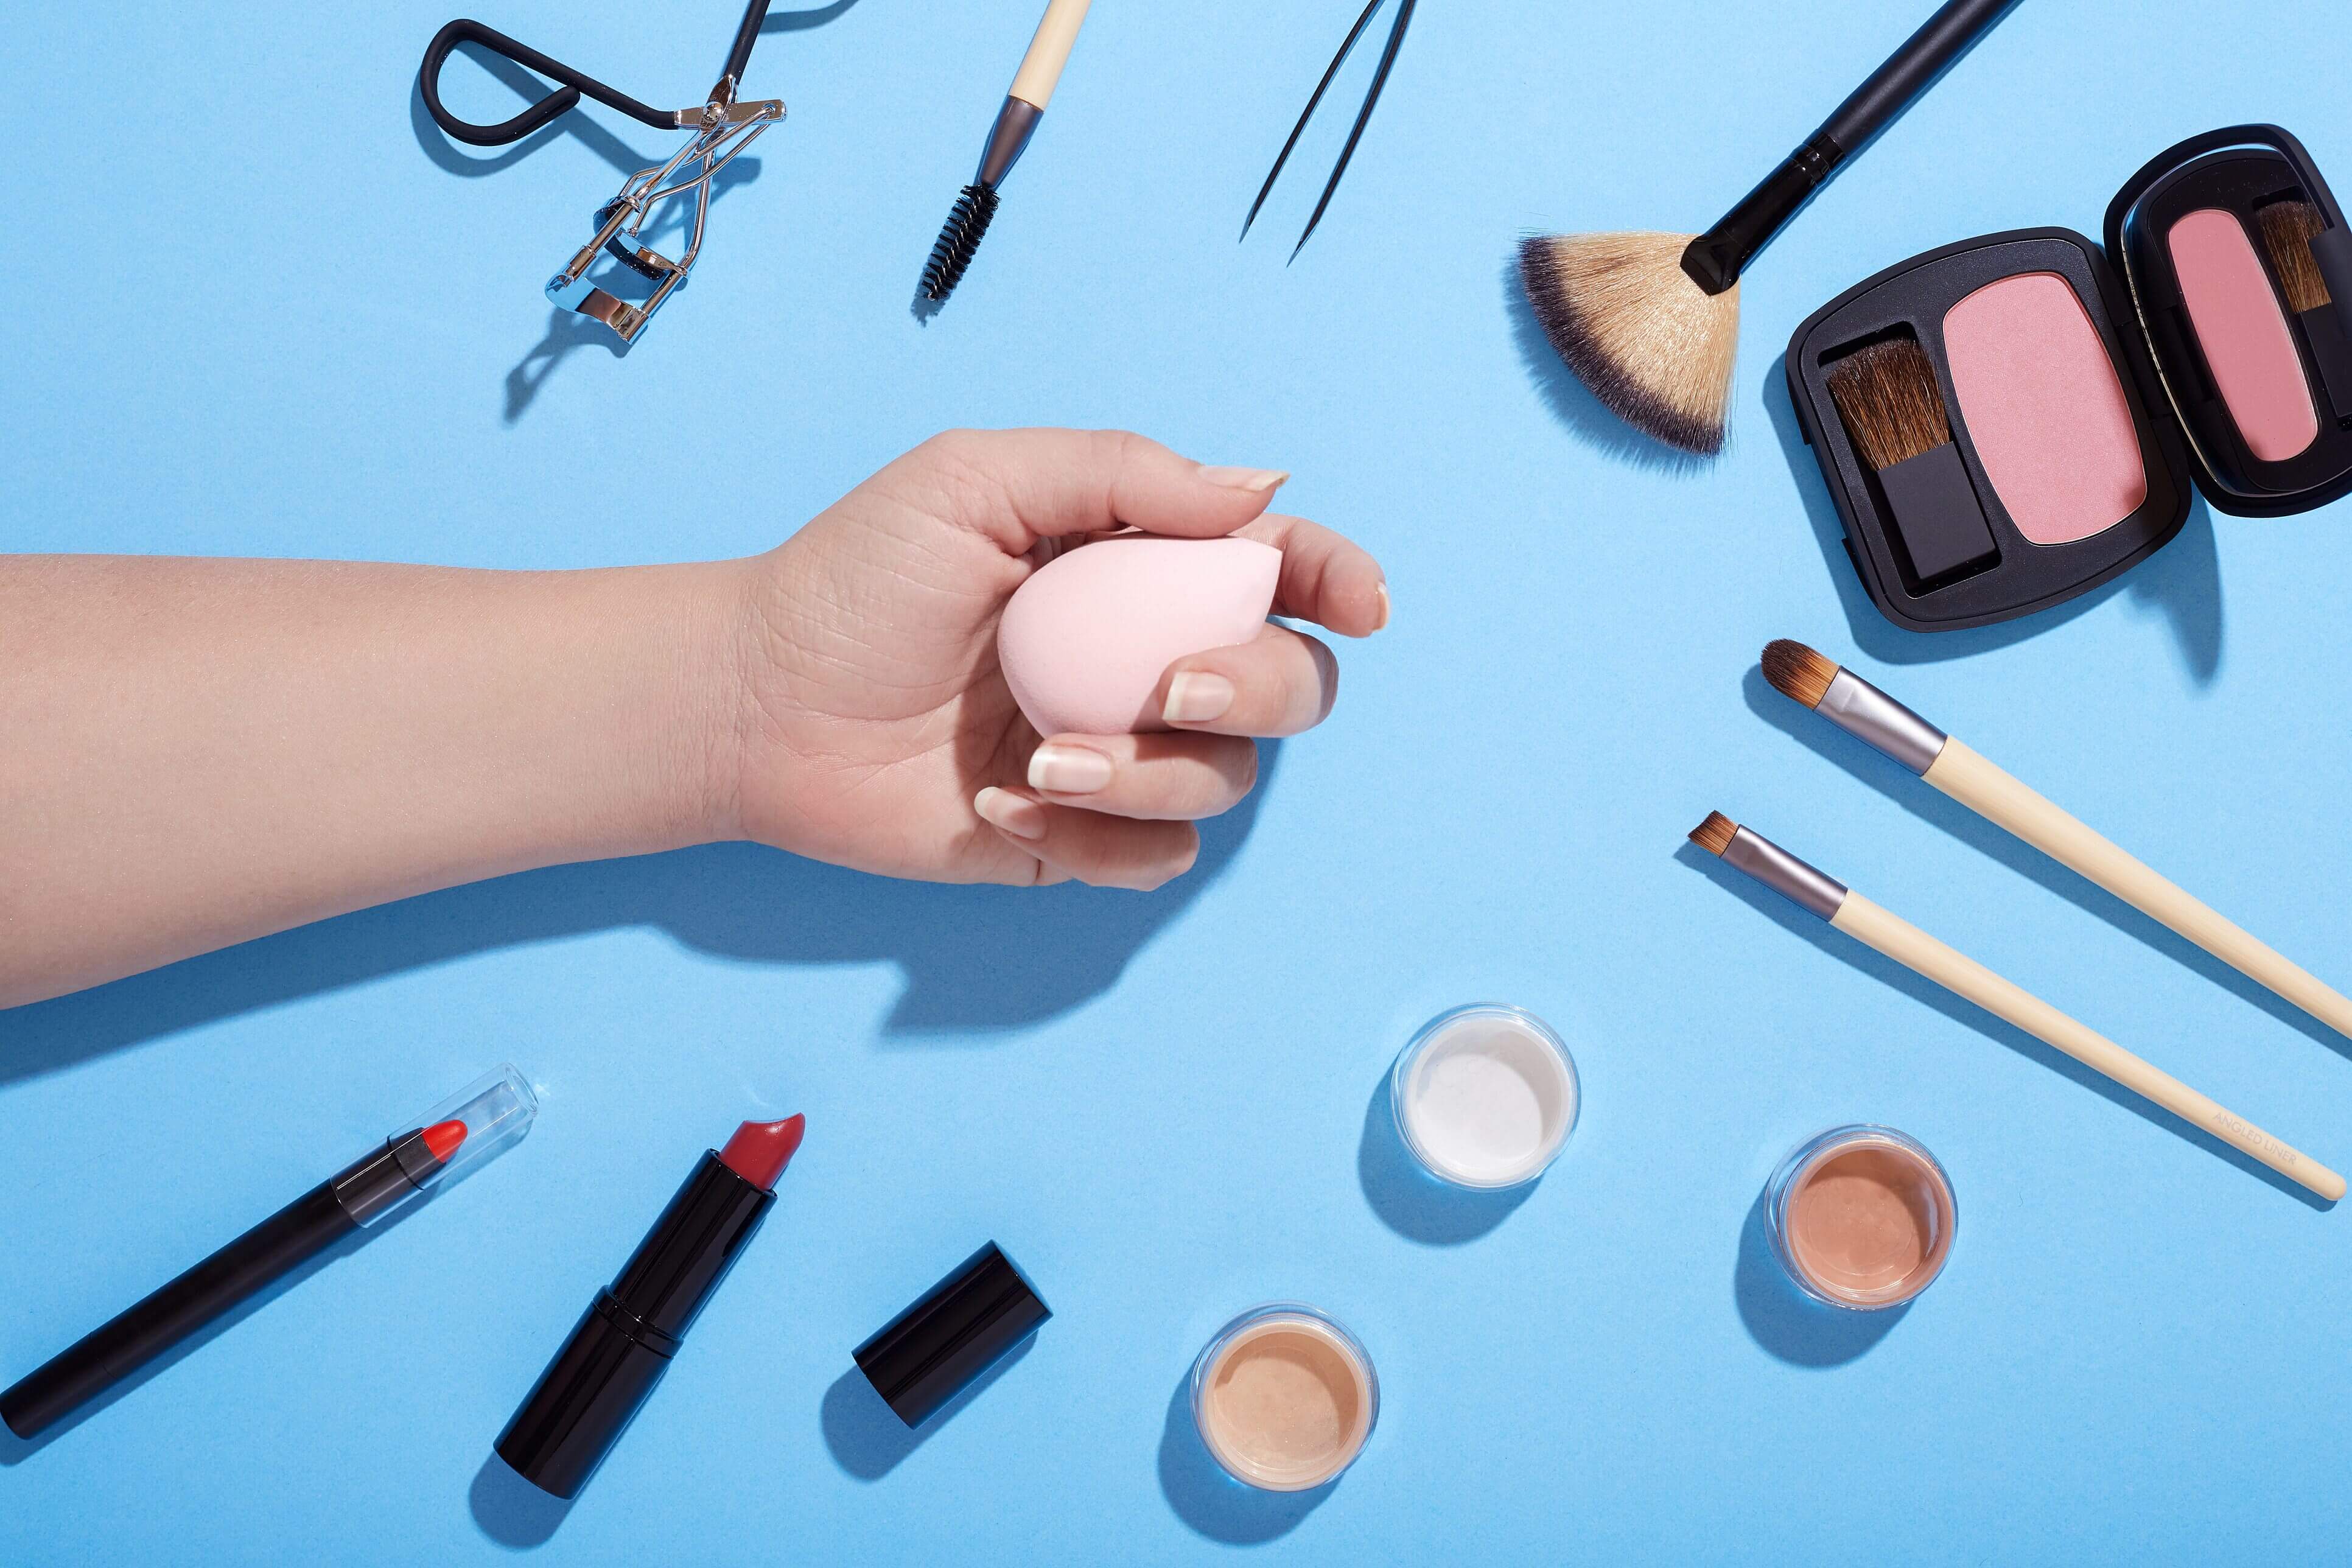 In 90% of cosmetics contain dangerous bacteria